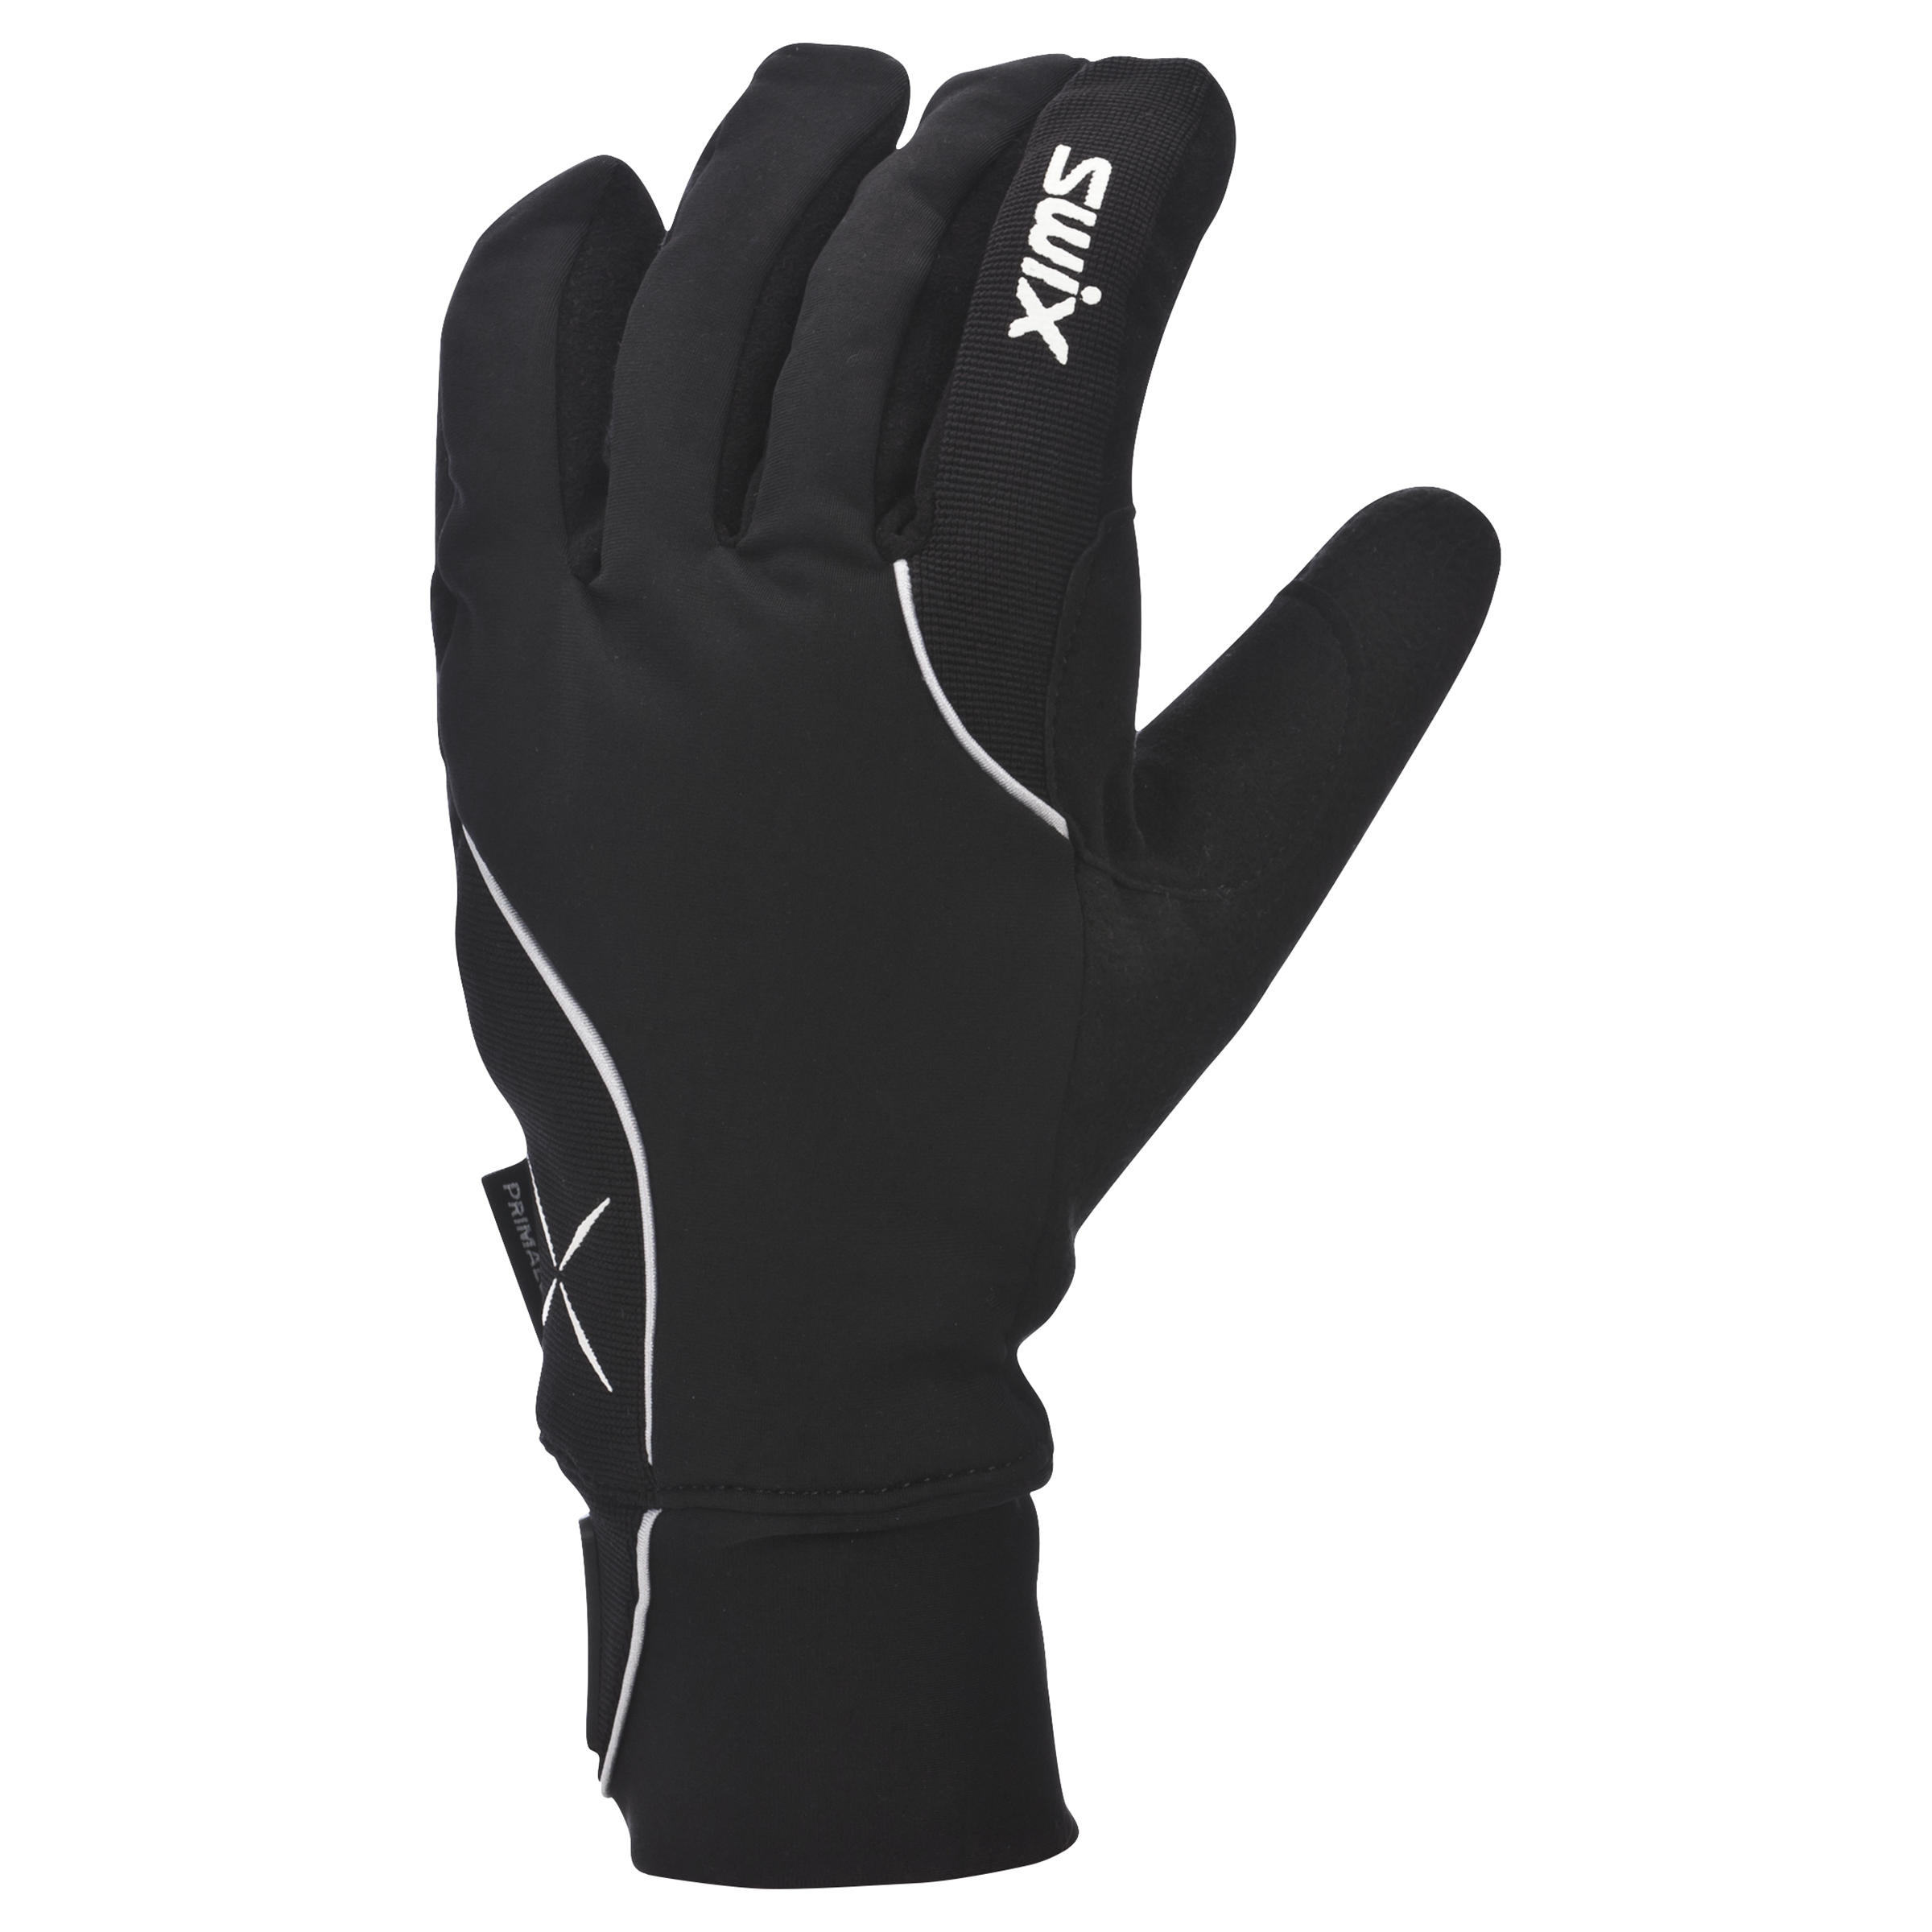 SWIX Recreational Cross-Country Skiing Warm Gloves - Black